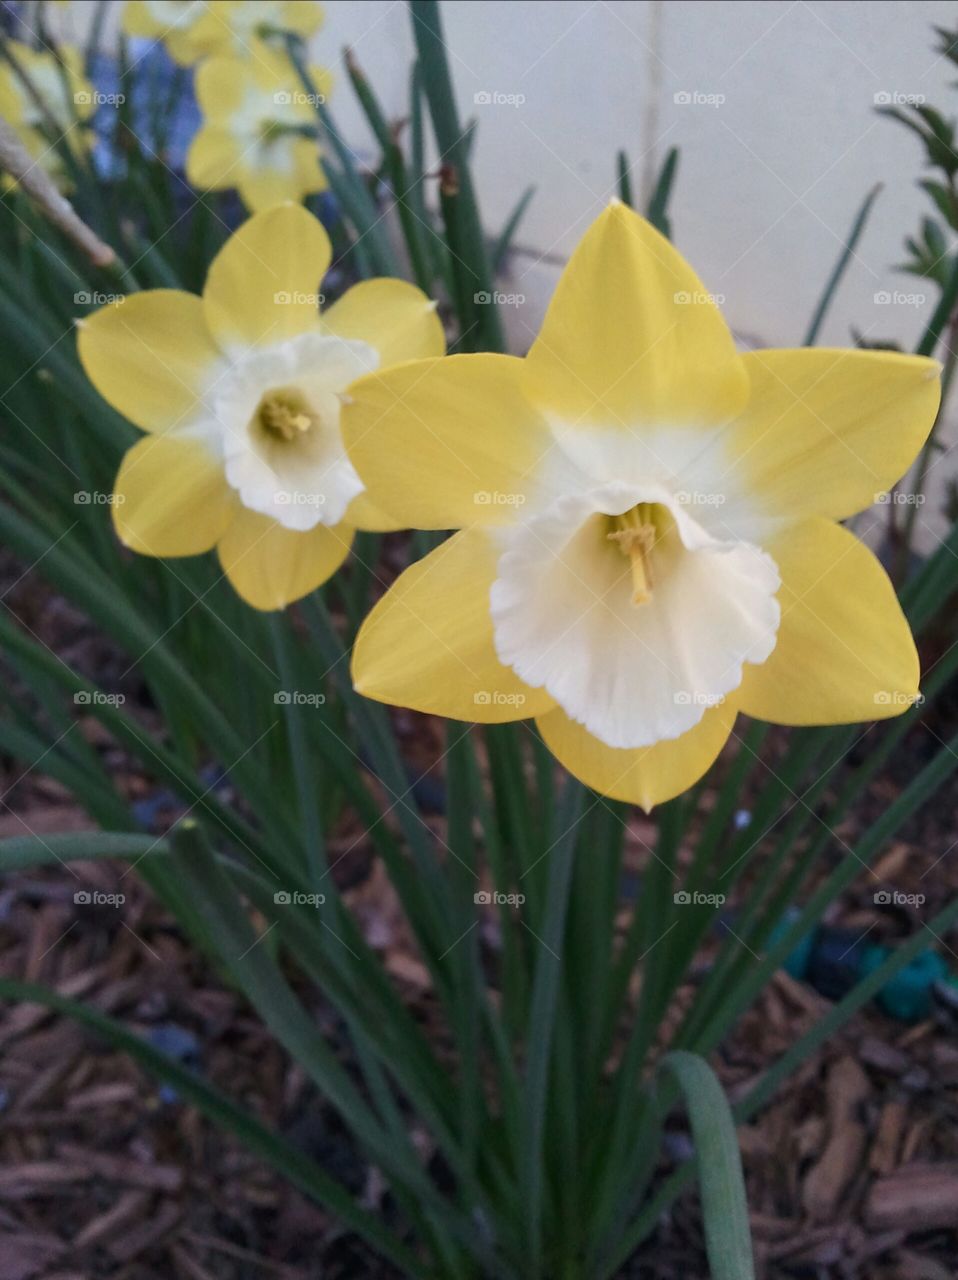 jonquil, daffodil